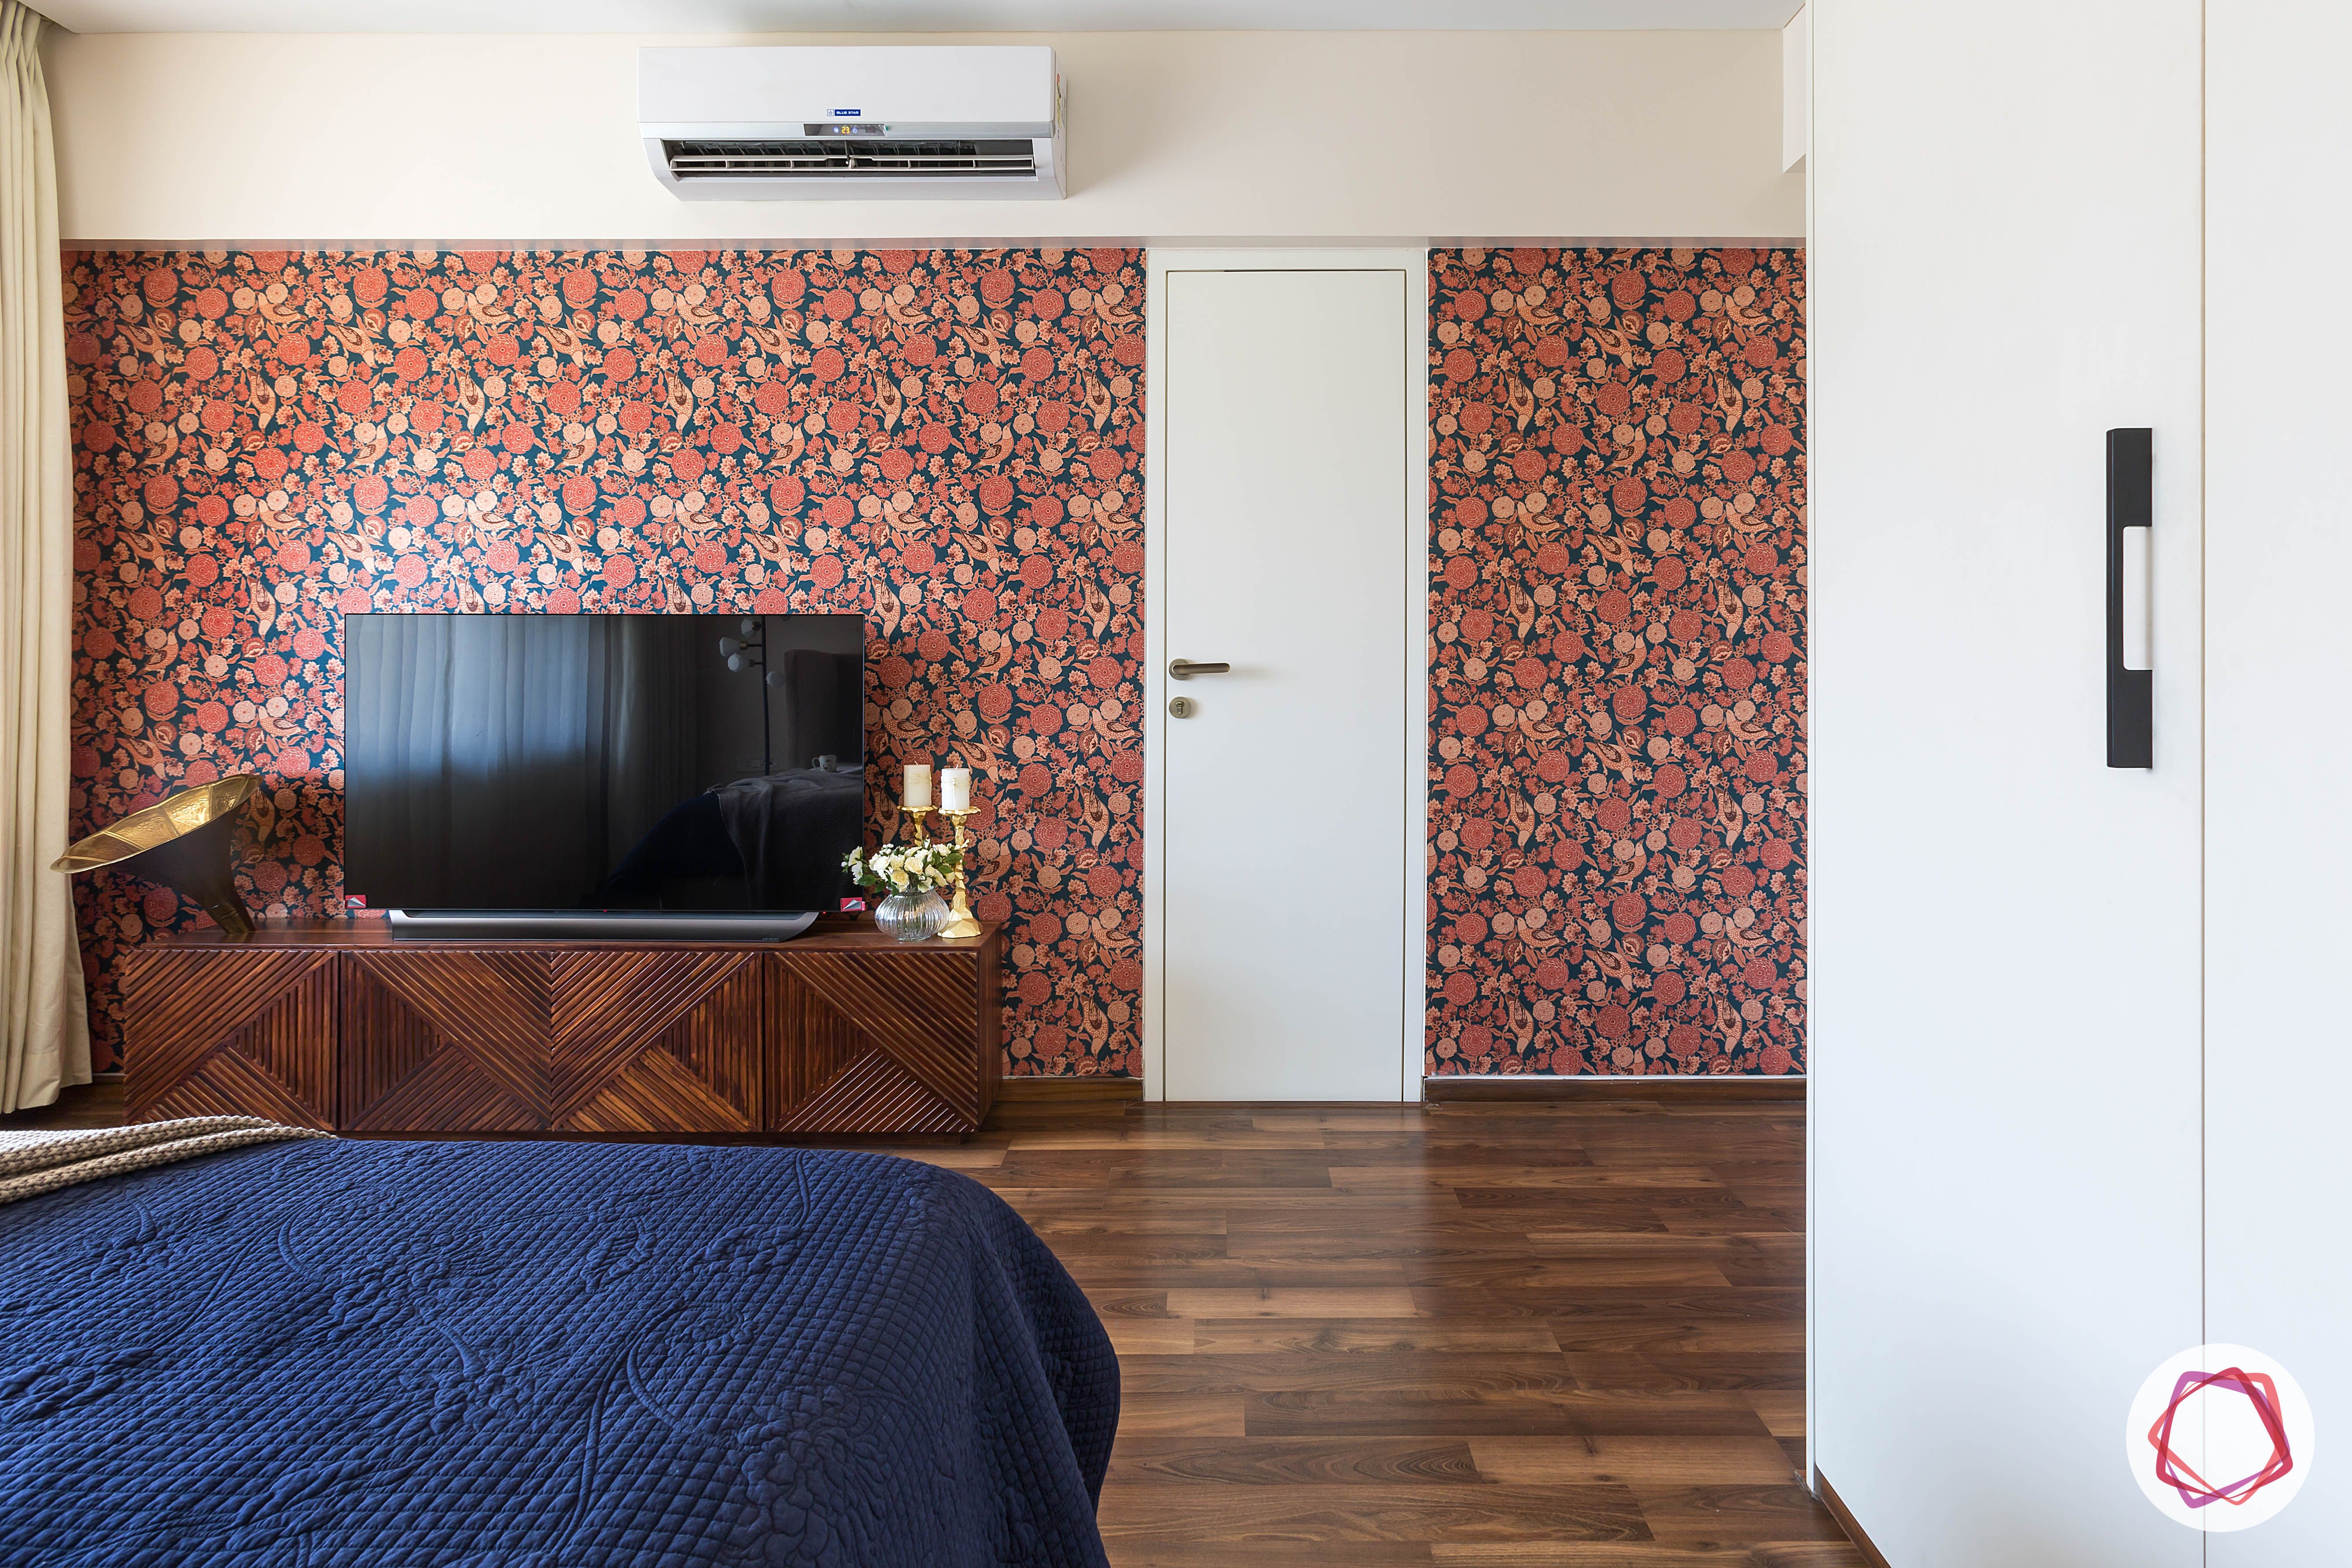 4bhk house plan-guest room designs-wooden tv unit-floral wallpaper-wooden flooring-vintage wallpaper-sabyasachi wallpaper 